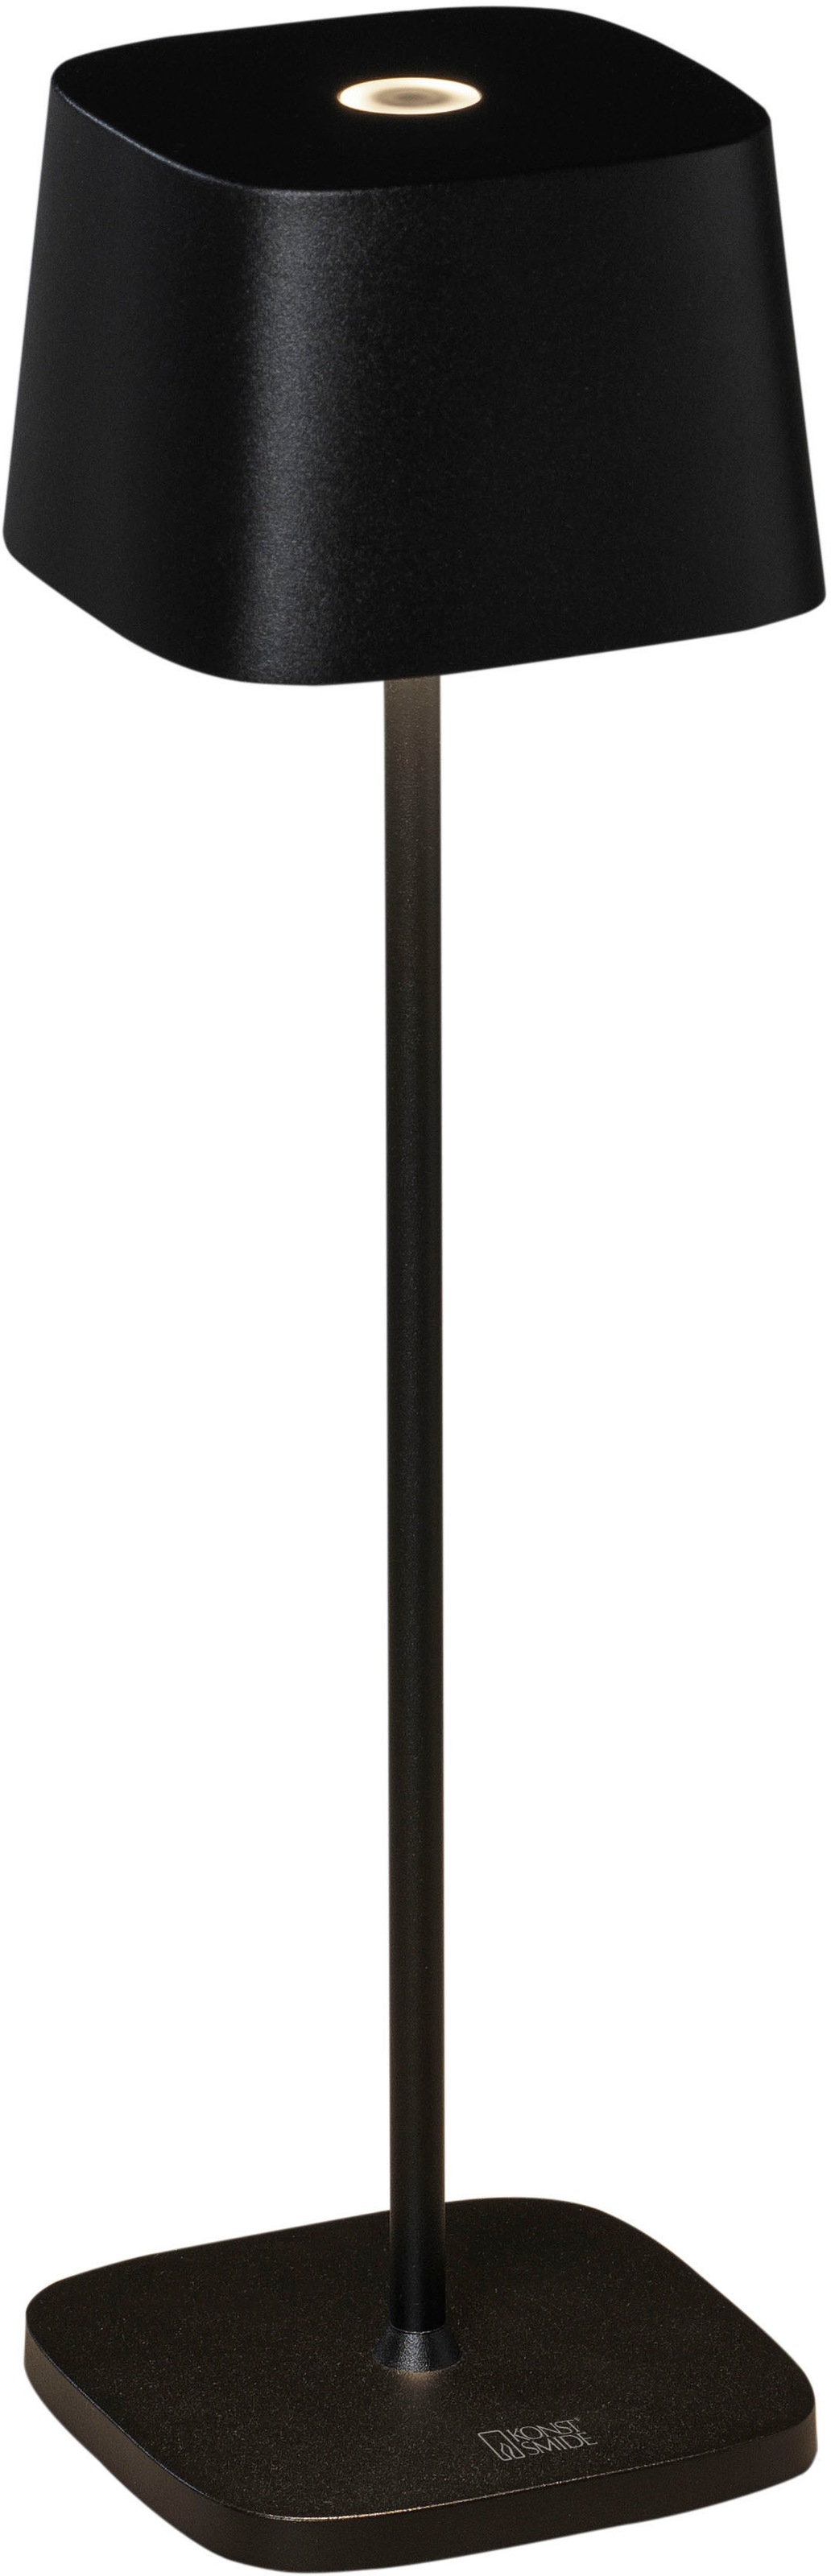 KONSTSMIDE LED Tischleuchte »Capri«, Capri LED USB-Tischleuchte schwarz, Farbtemperatur, dimmba